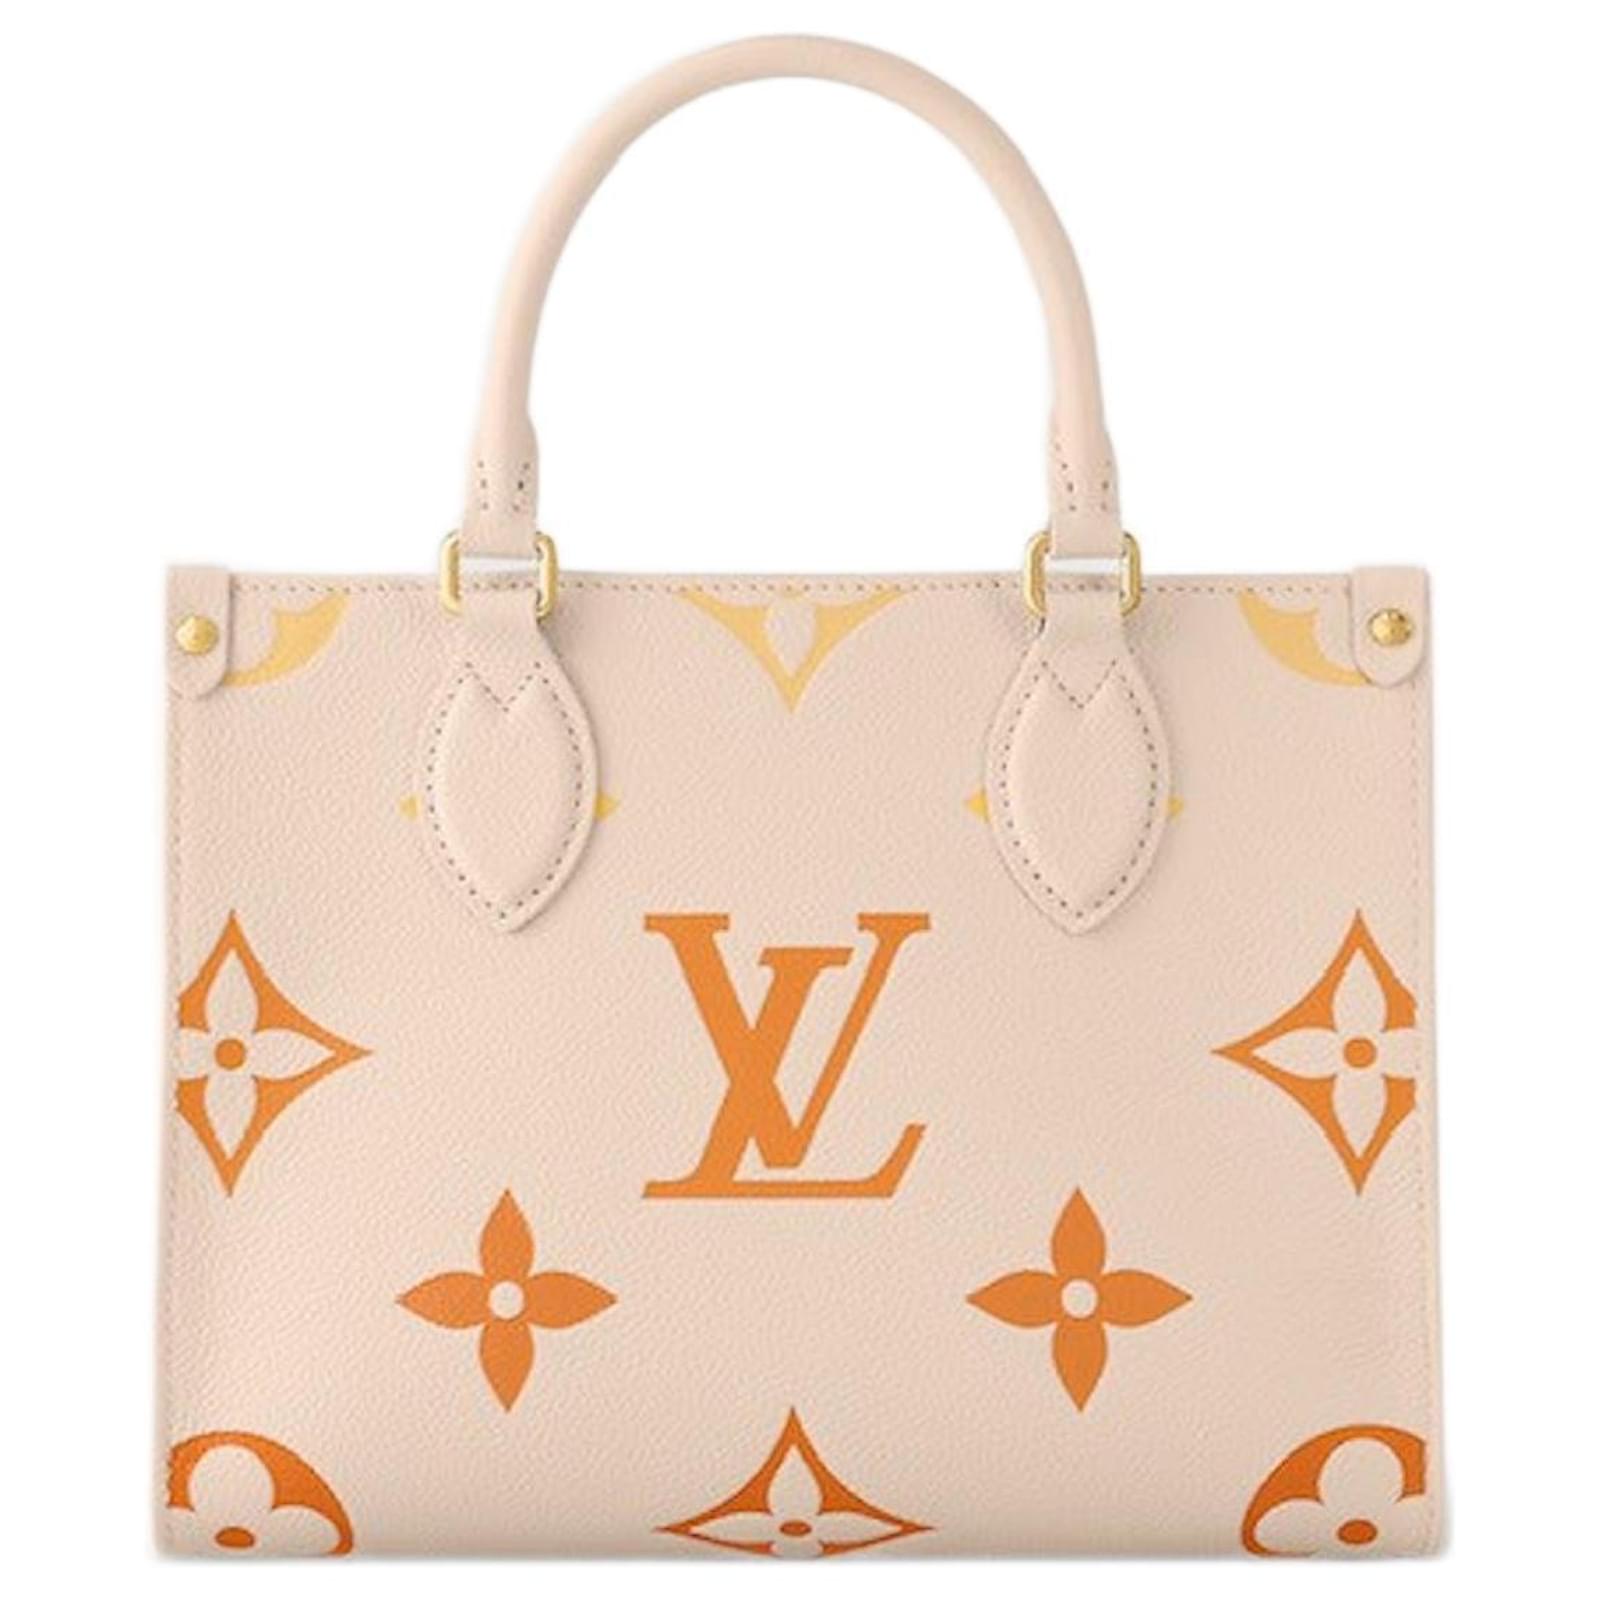 Authentic LOUIS VUITTON Handbag Tote Bag Pm LV Monogram -  Norway